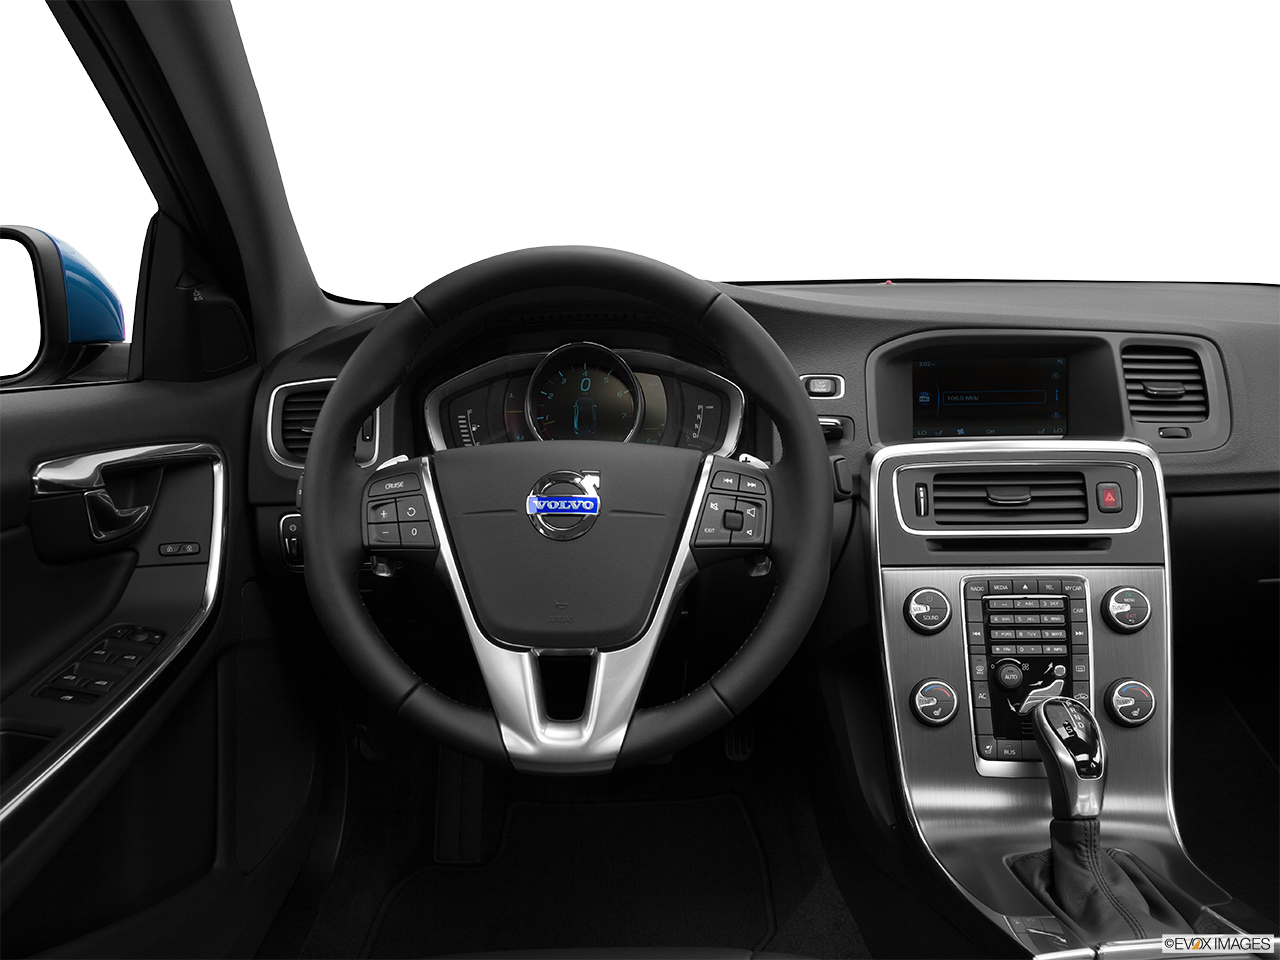 2014 Volvo S60 T5 FWD Premier Plus Steering wheel/Center Console. 